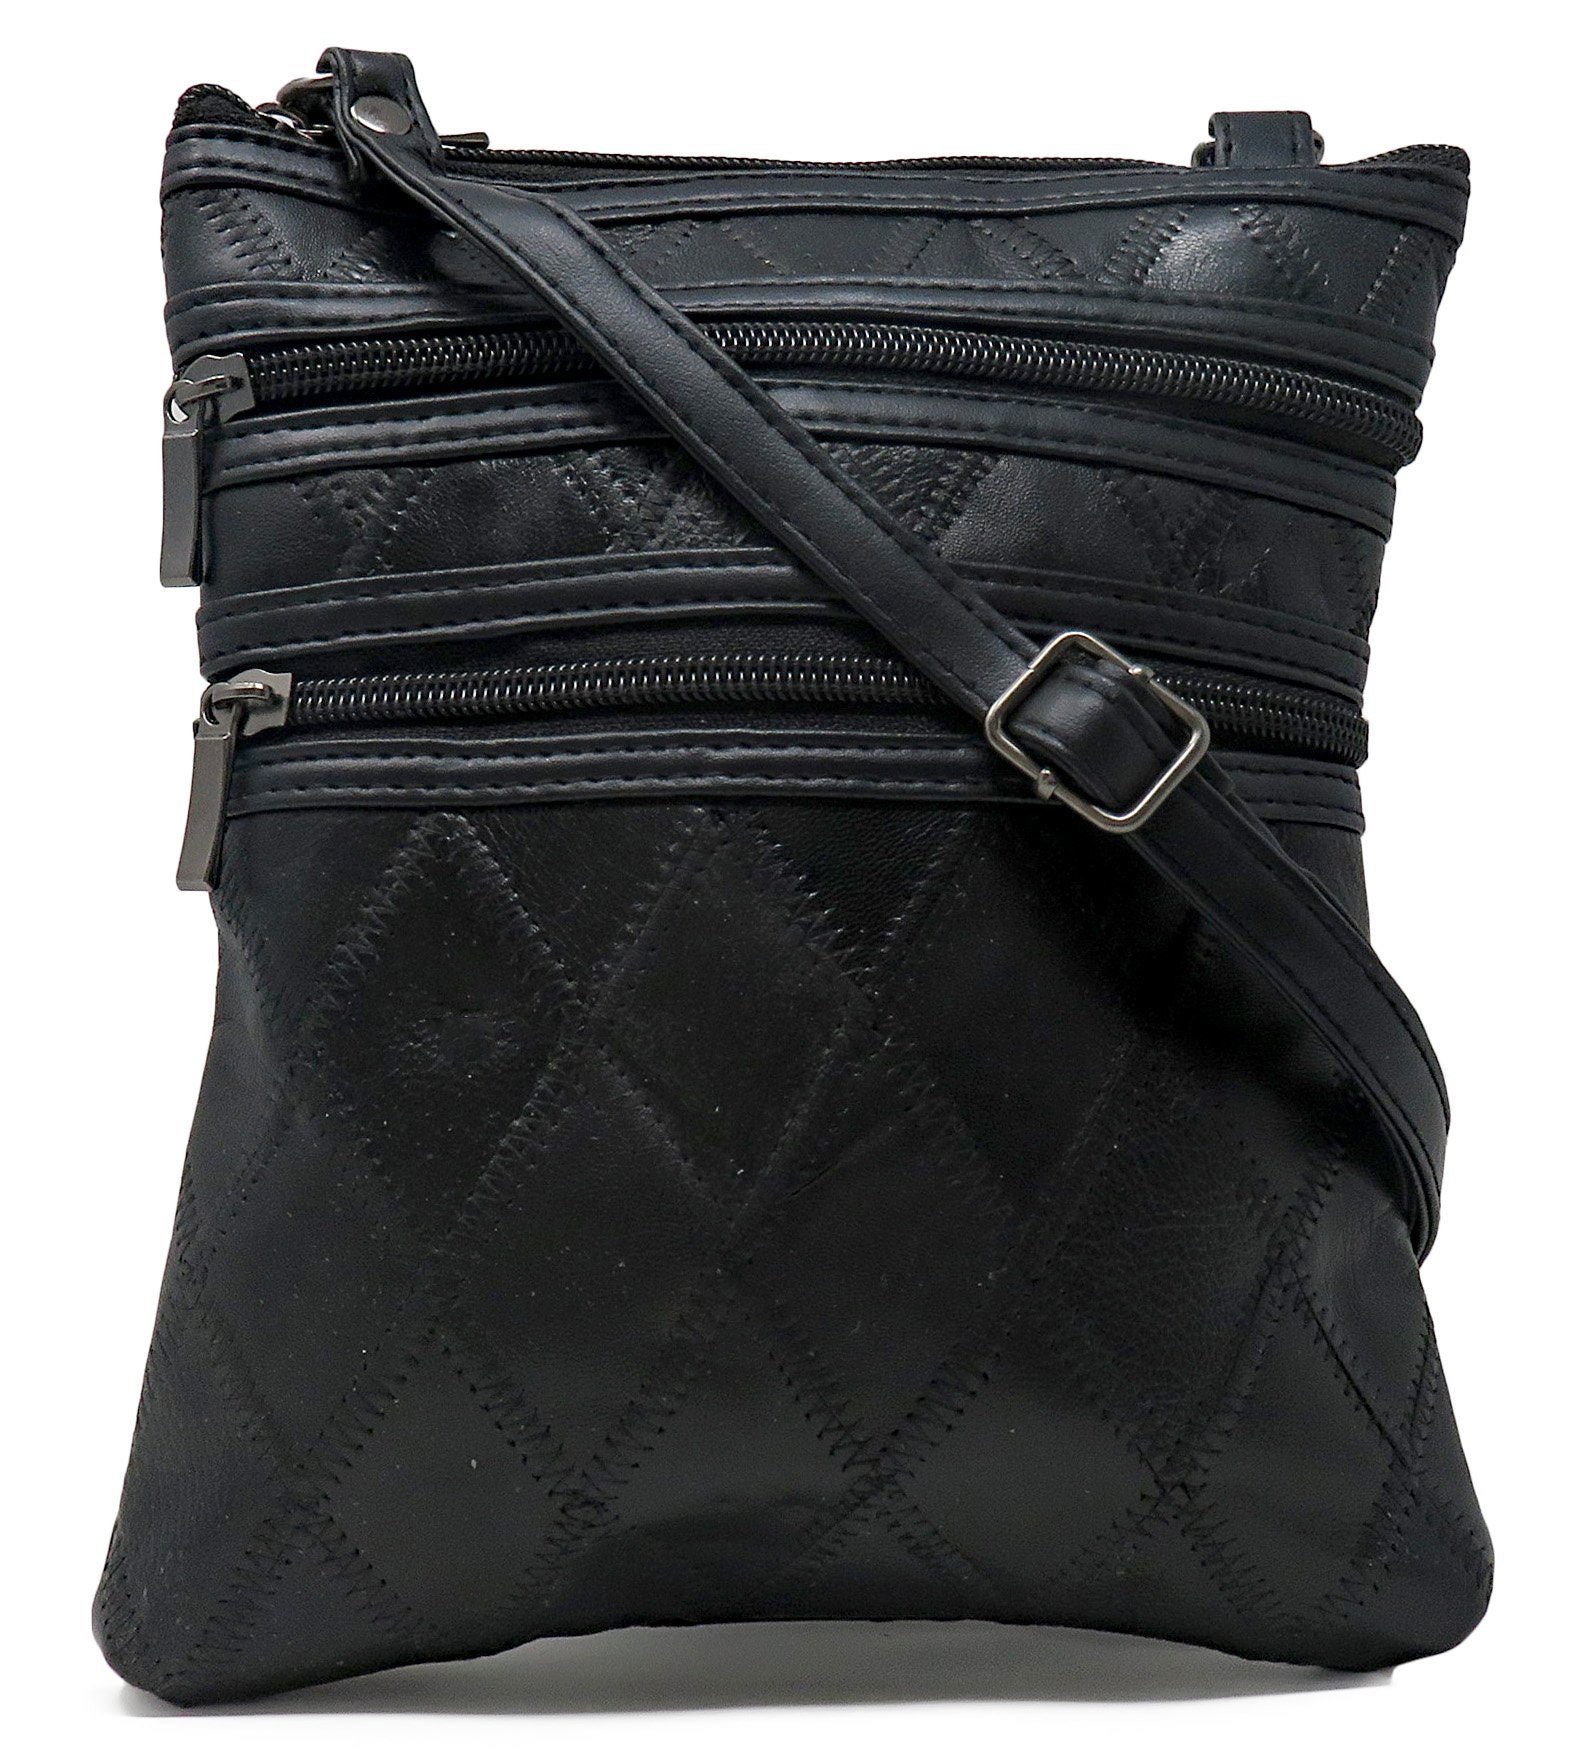 Leather Patchwork Handbag Crossbody Bags